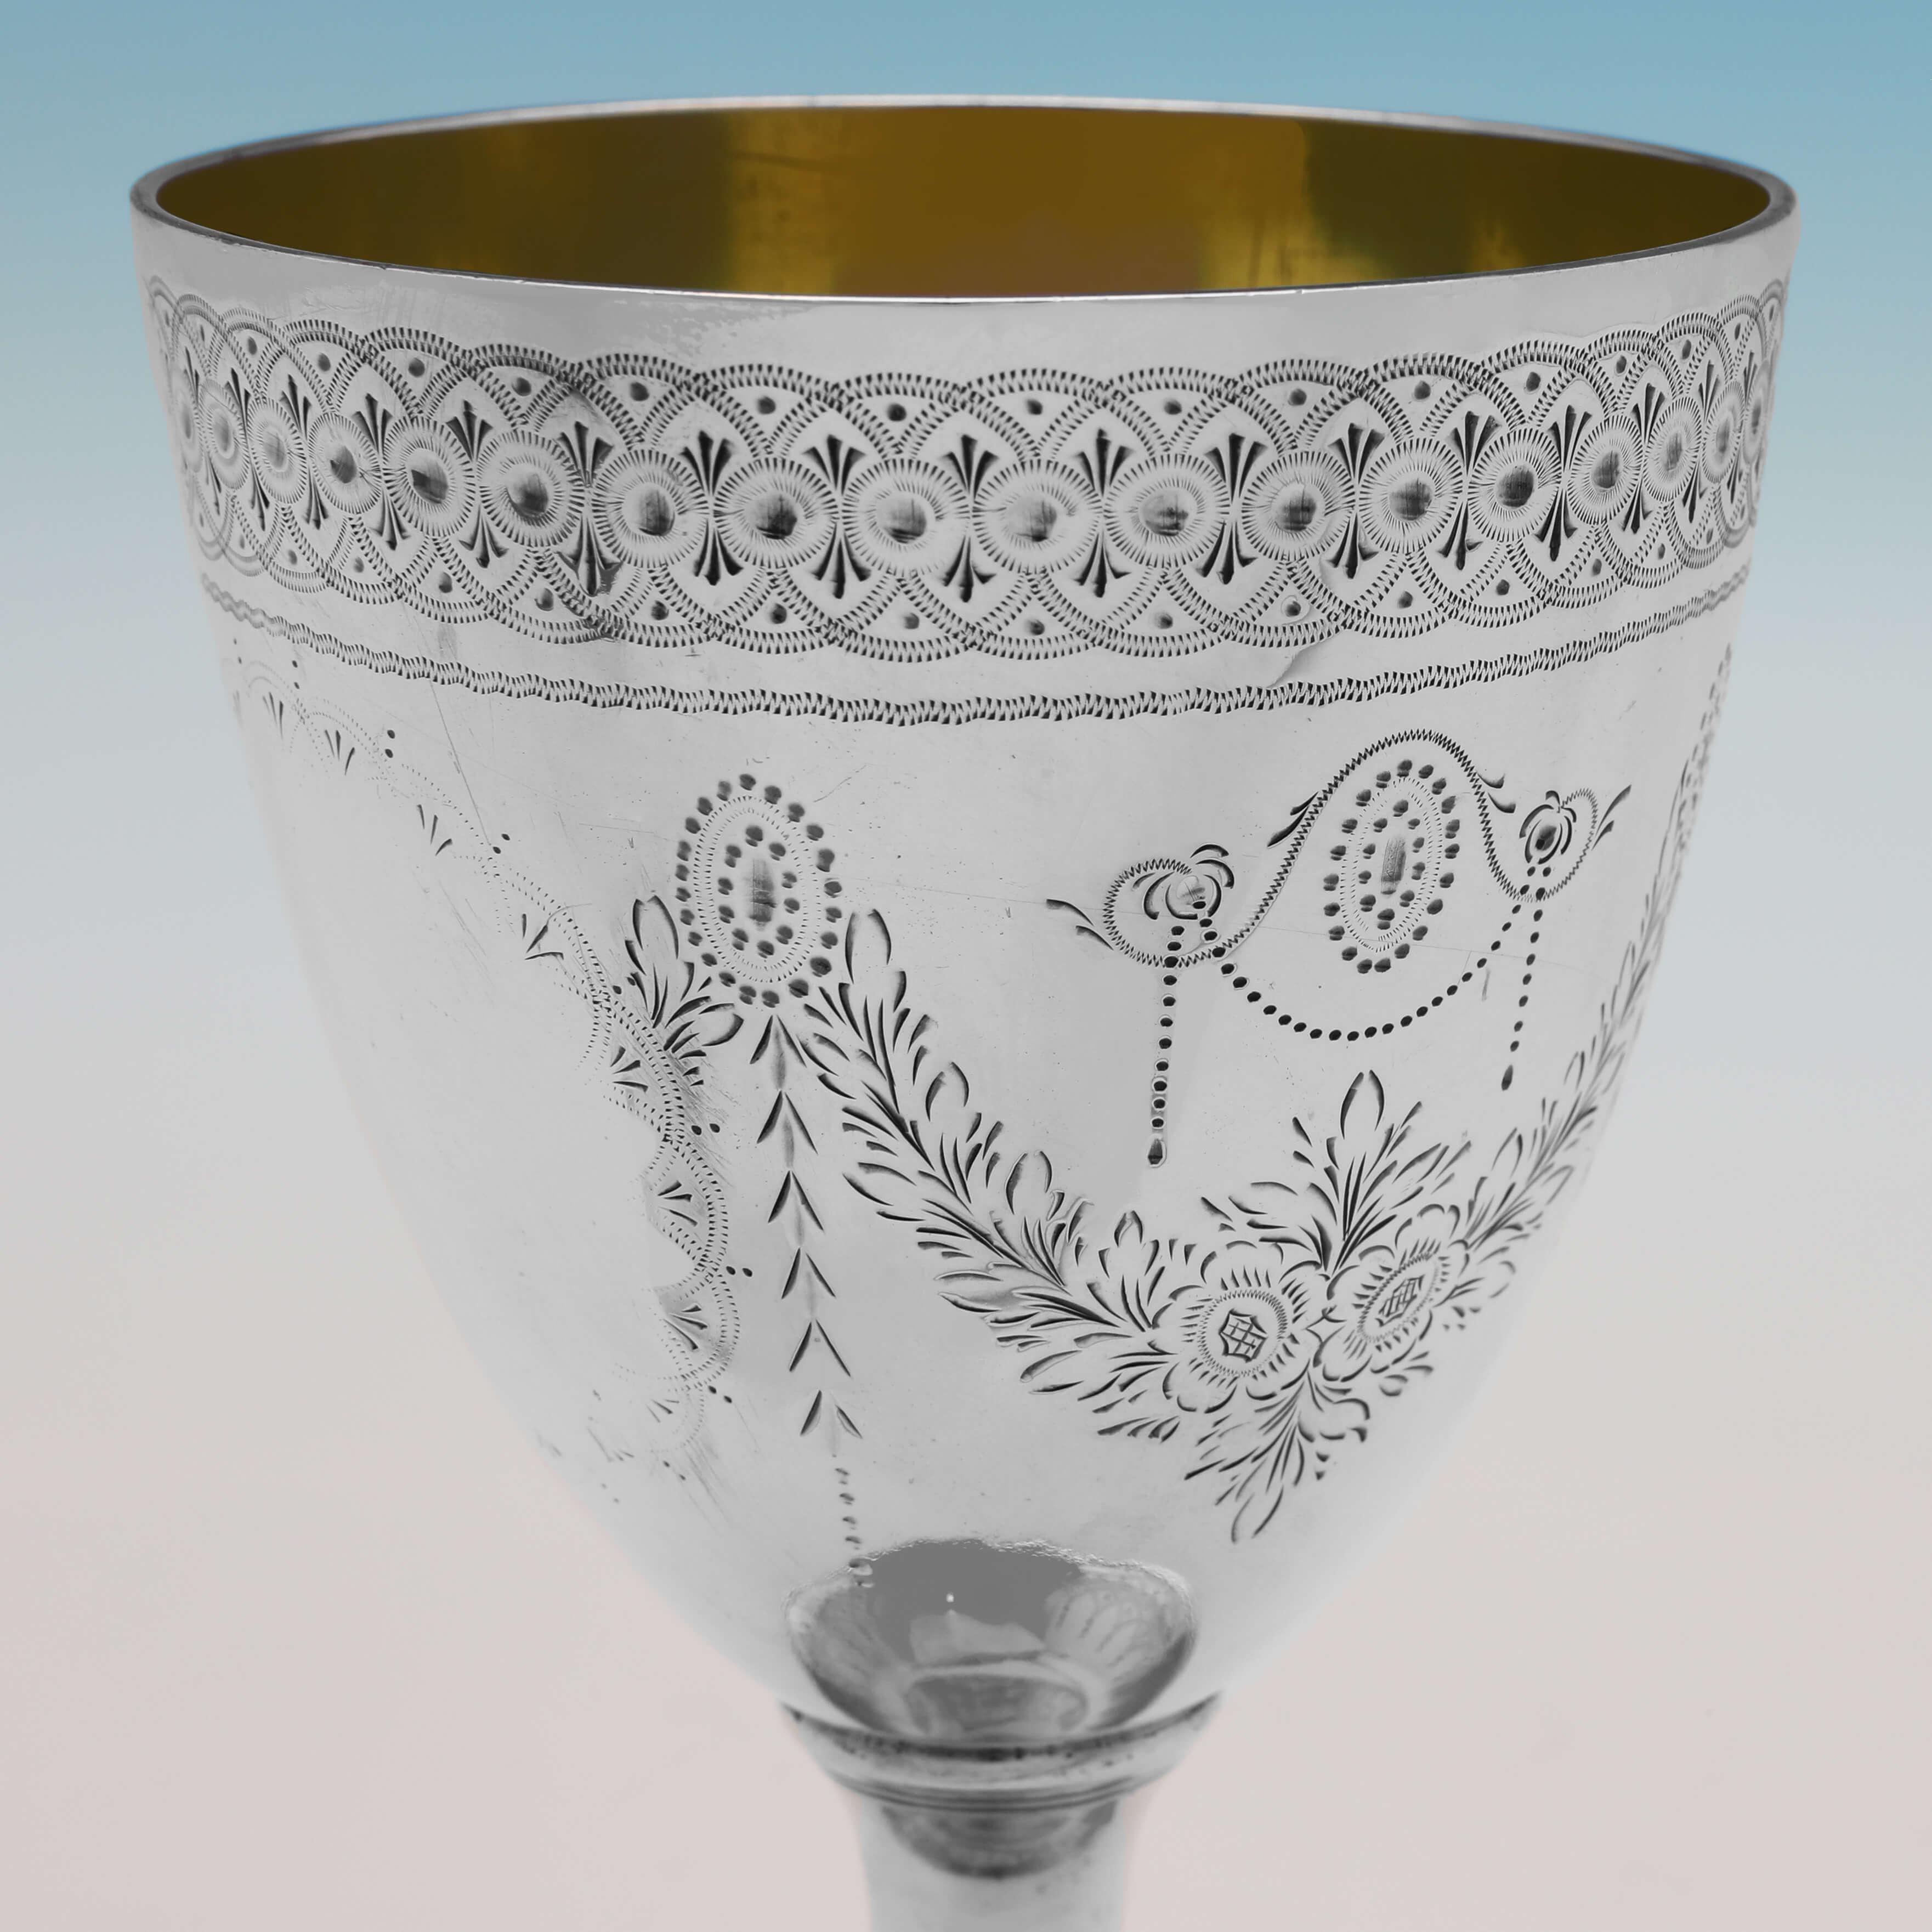 Neoclassical Regency Period Antique Sterling Silver Goblet - London 1811 - P. & W. Bateman For Sale